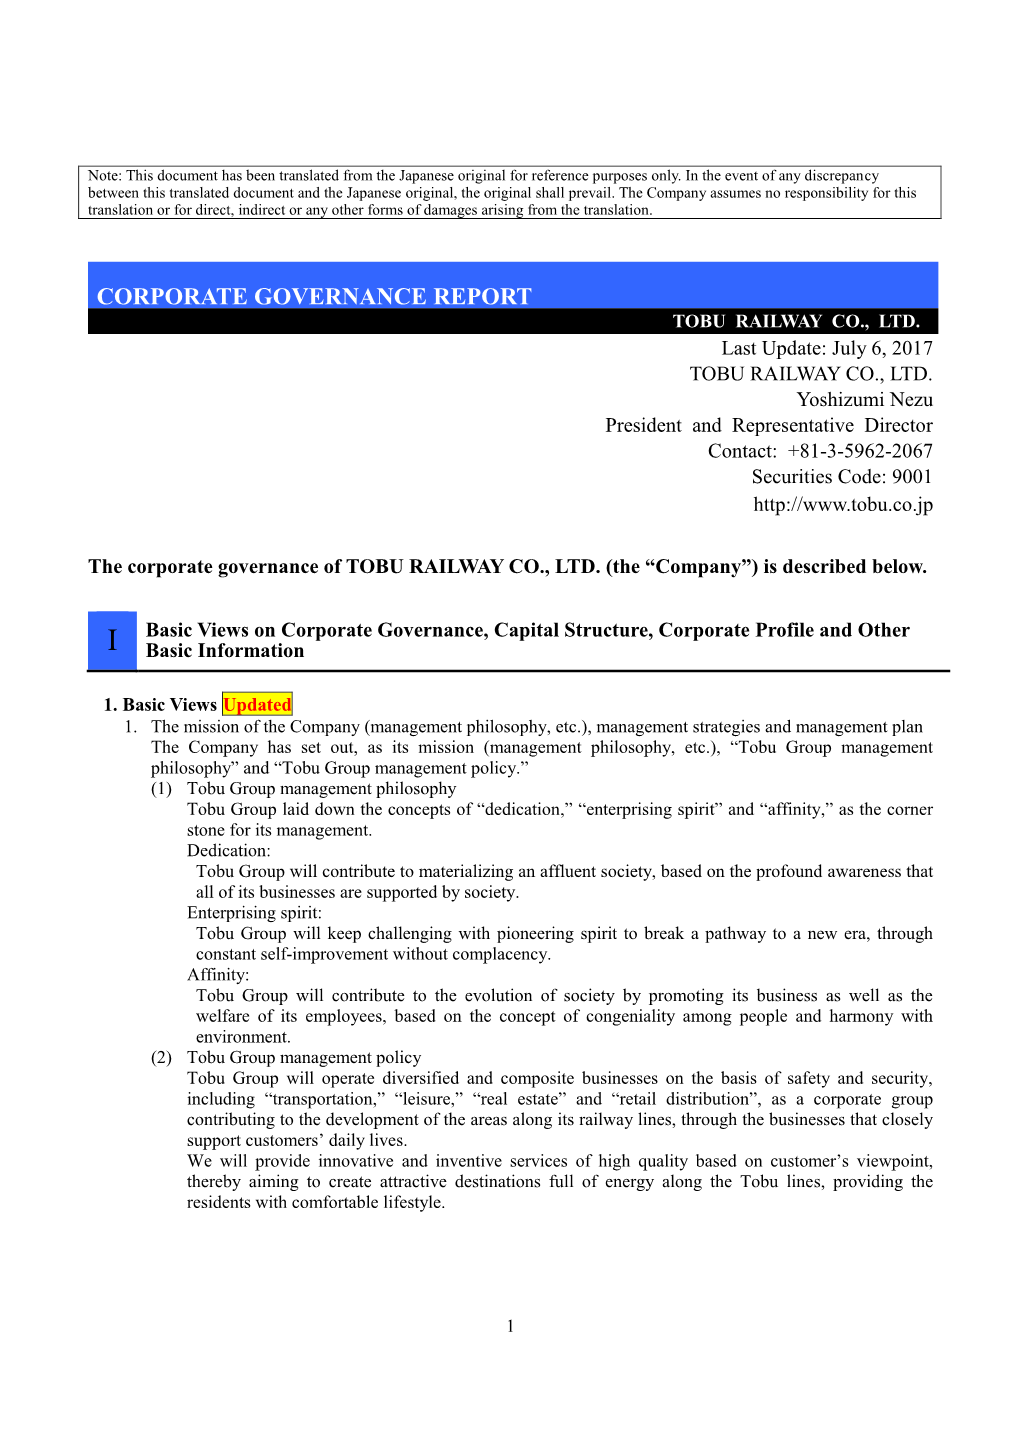 Corporate Governance Report Tobu Railway Co., Ltd